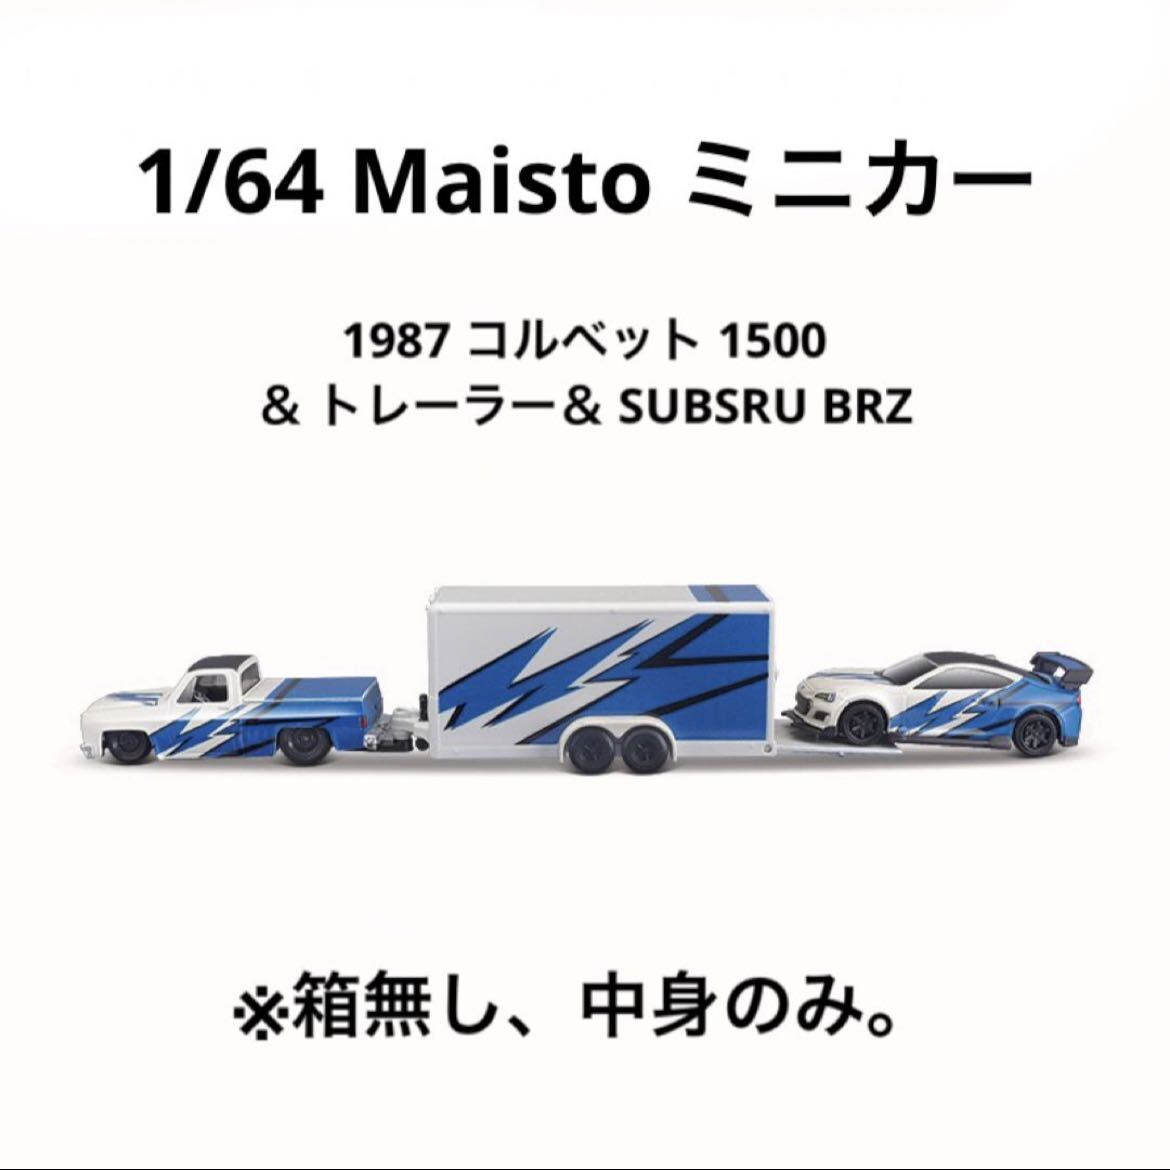 1/64 minicar Maisto Maisto Corvette 1500& trailer & Subaru BRZ * box less ., contents only 